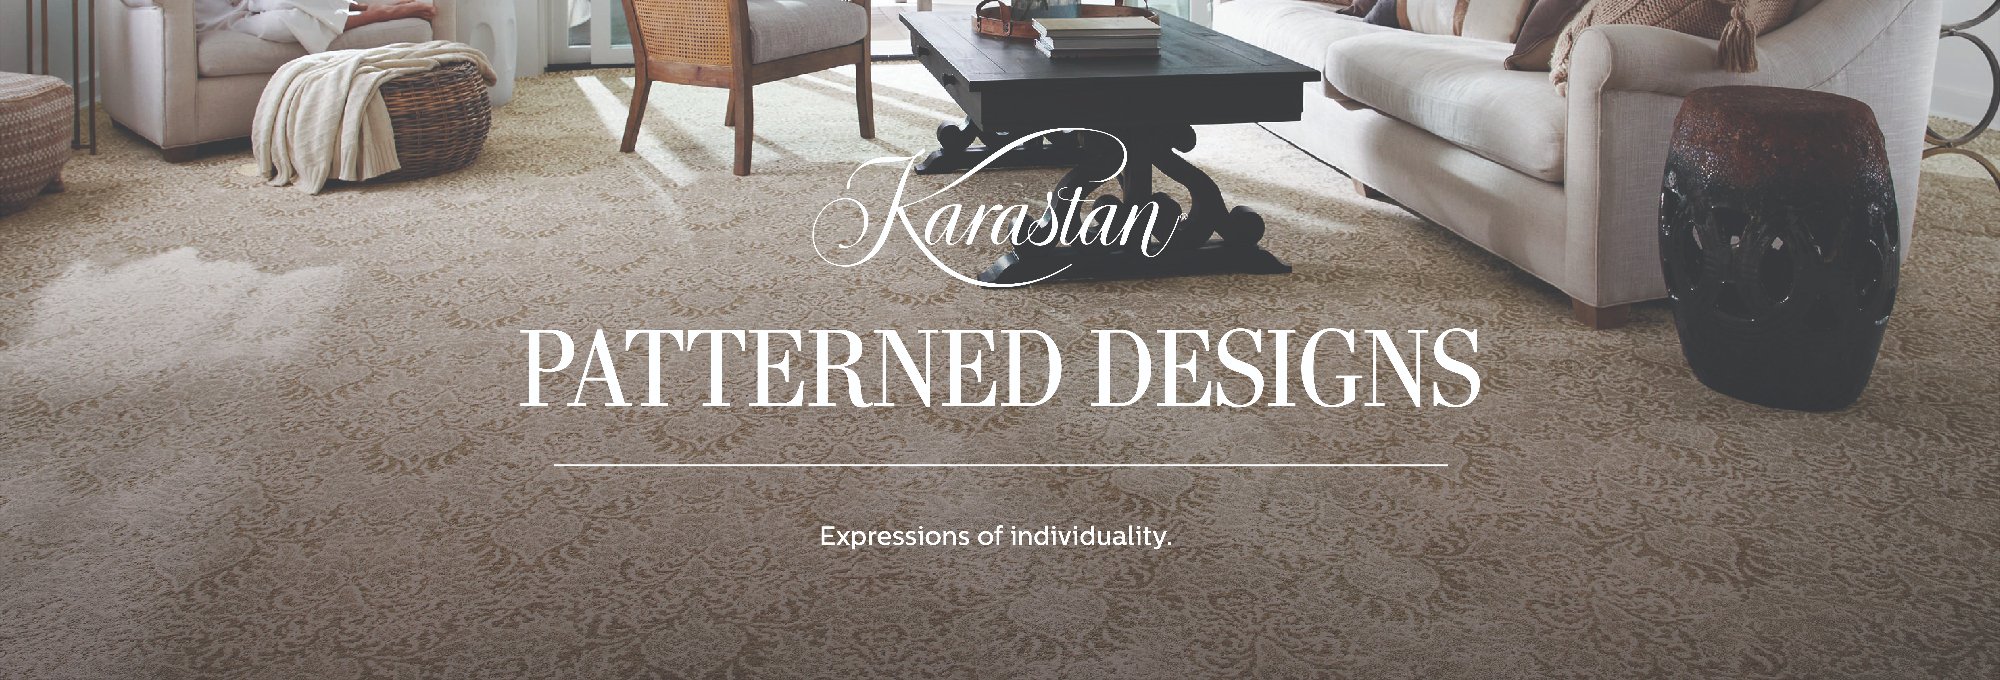 Browse Karastan products